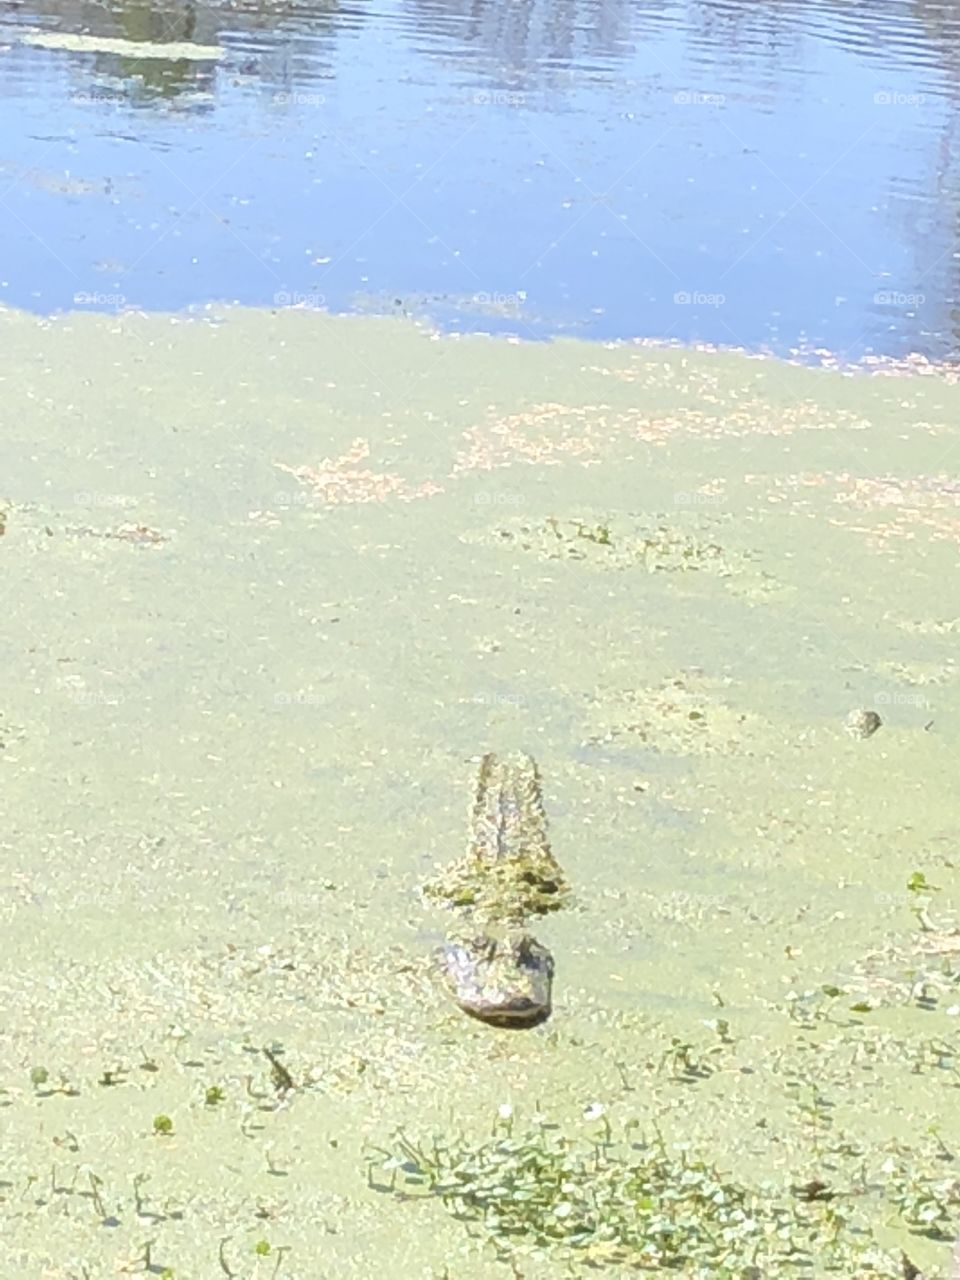 Hidden alligator